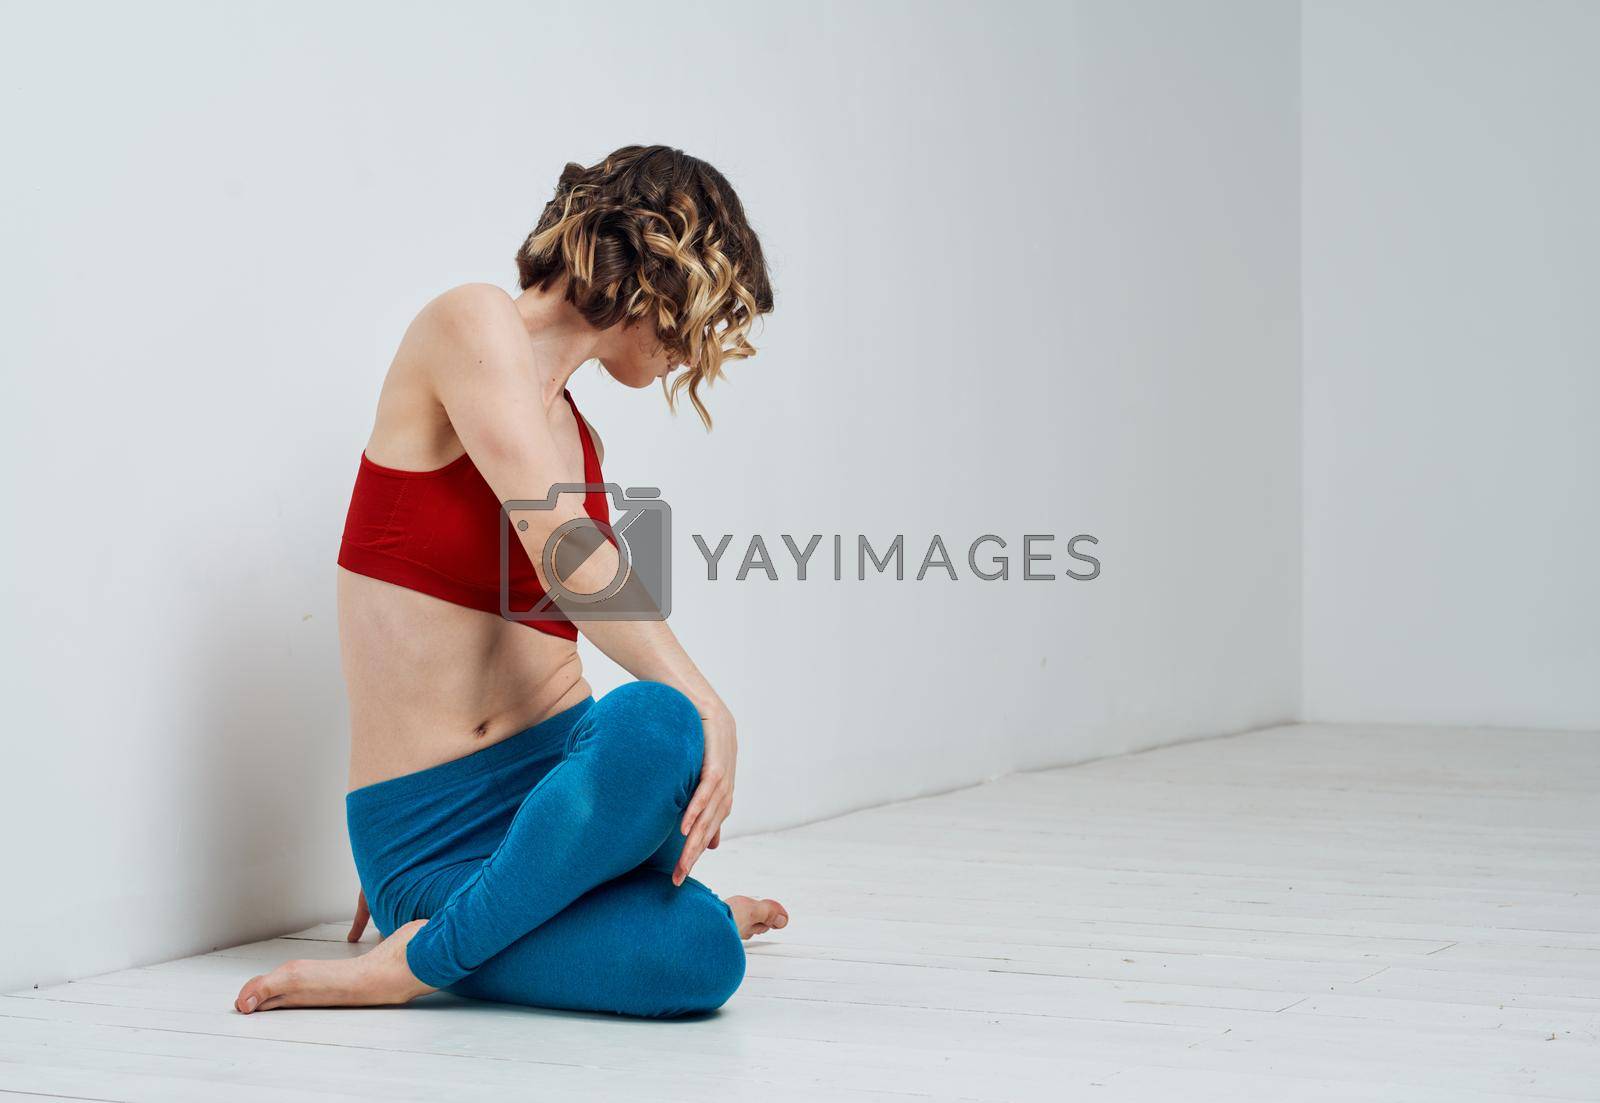 Blue leggings red t-shirt woman yoga asana twisting. High quality photo